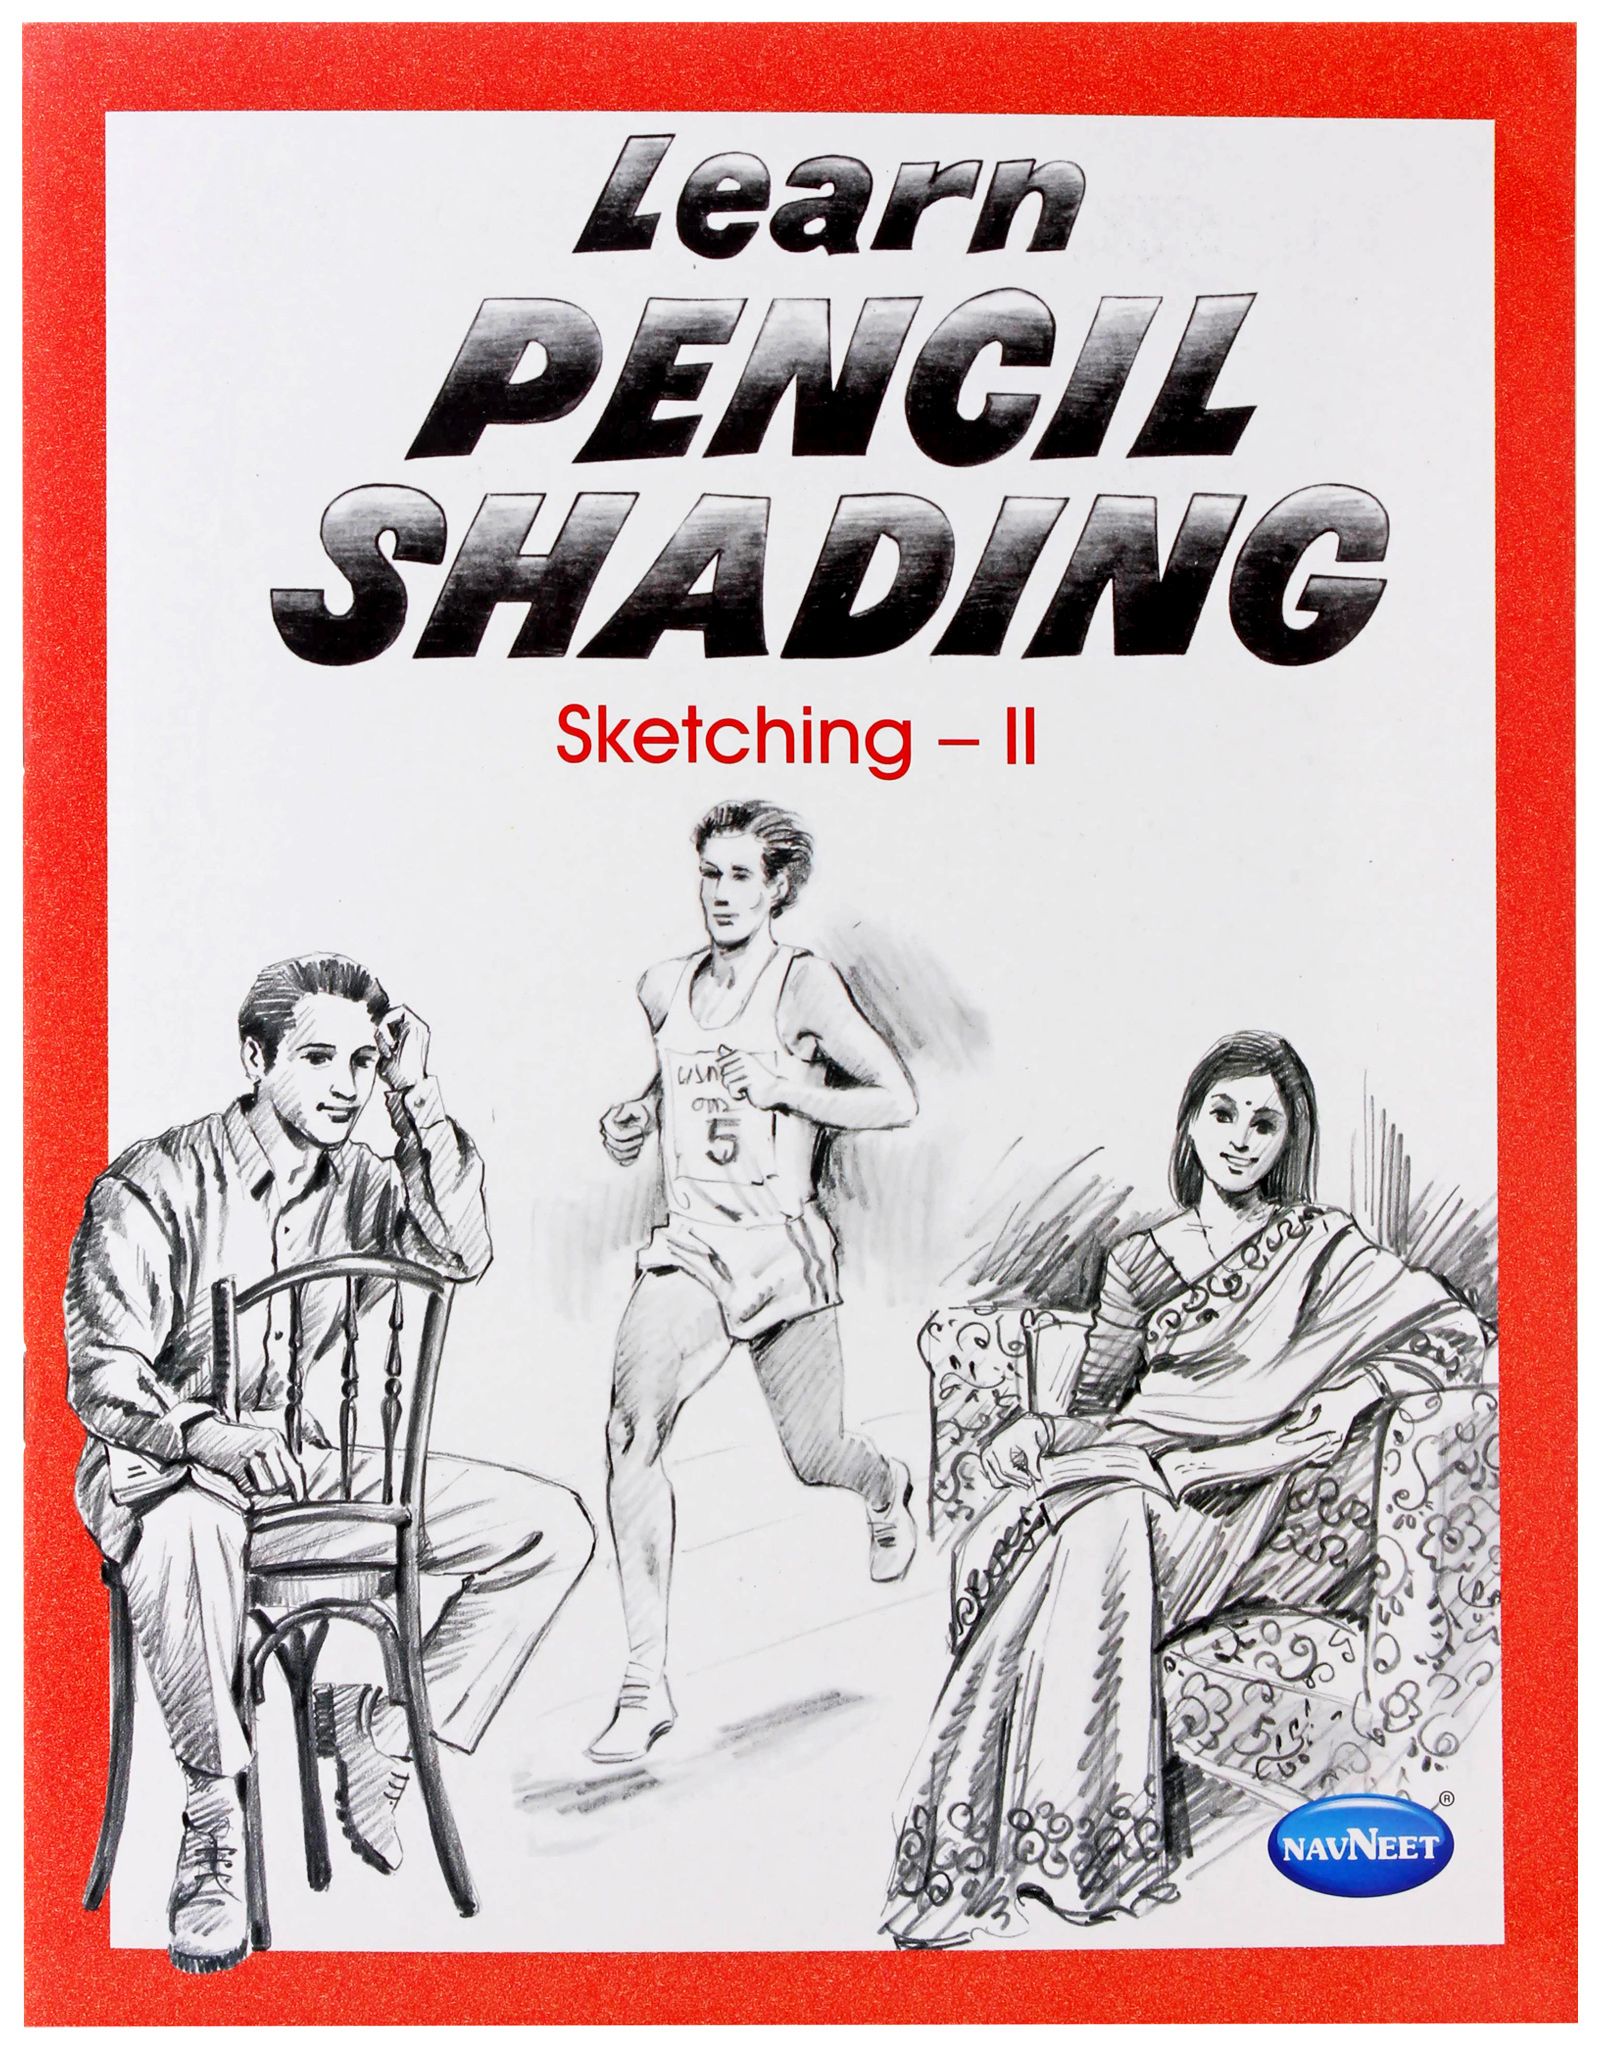 NavNeet - Learn Pencil Shading Sketching Book 2